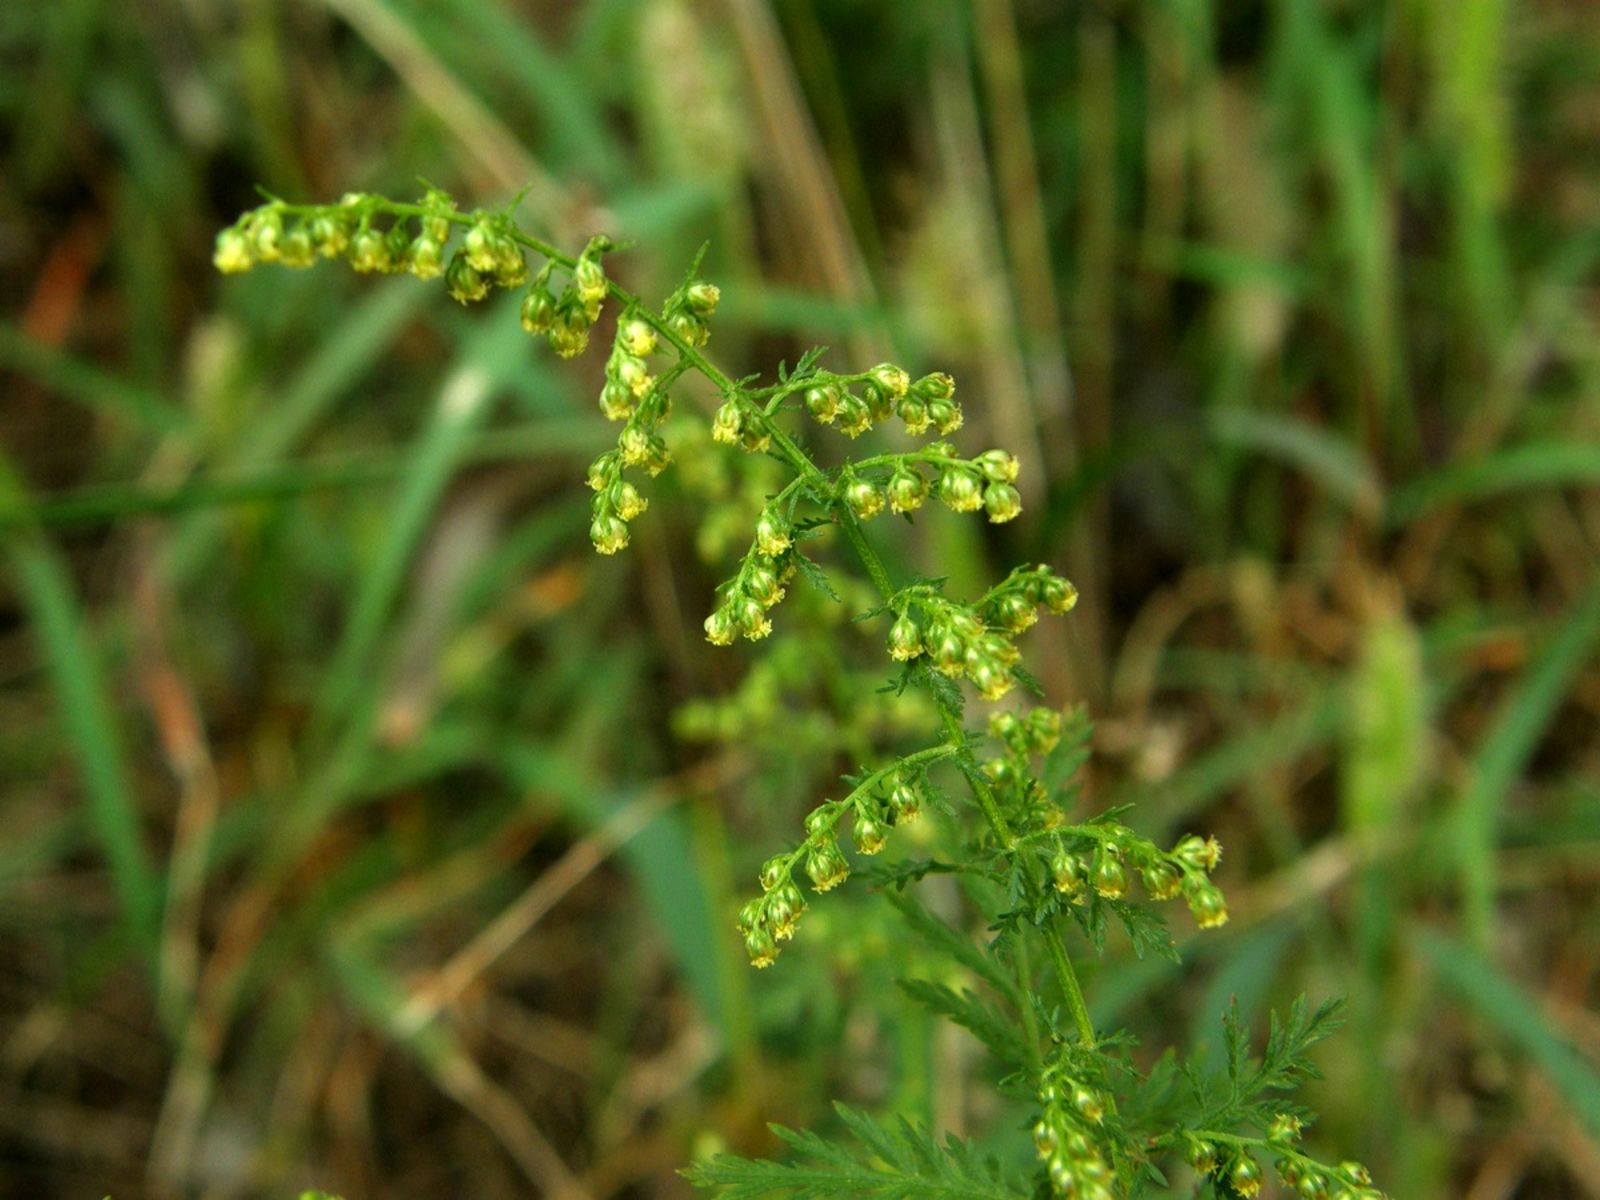 Learn more about Artemisia annua - Artennua®